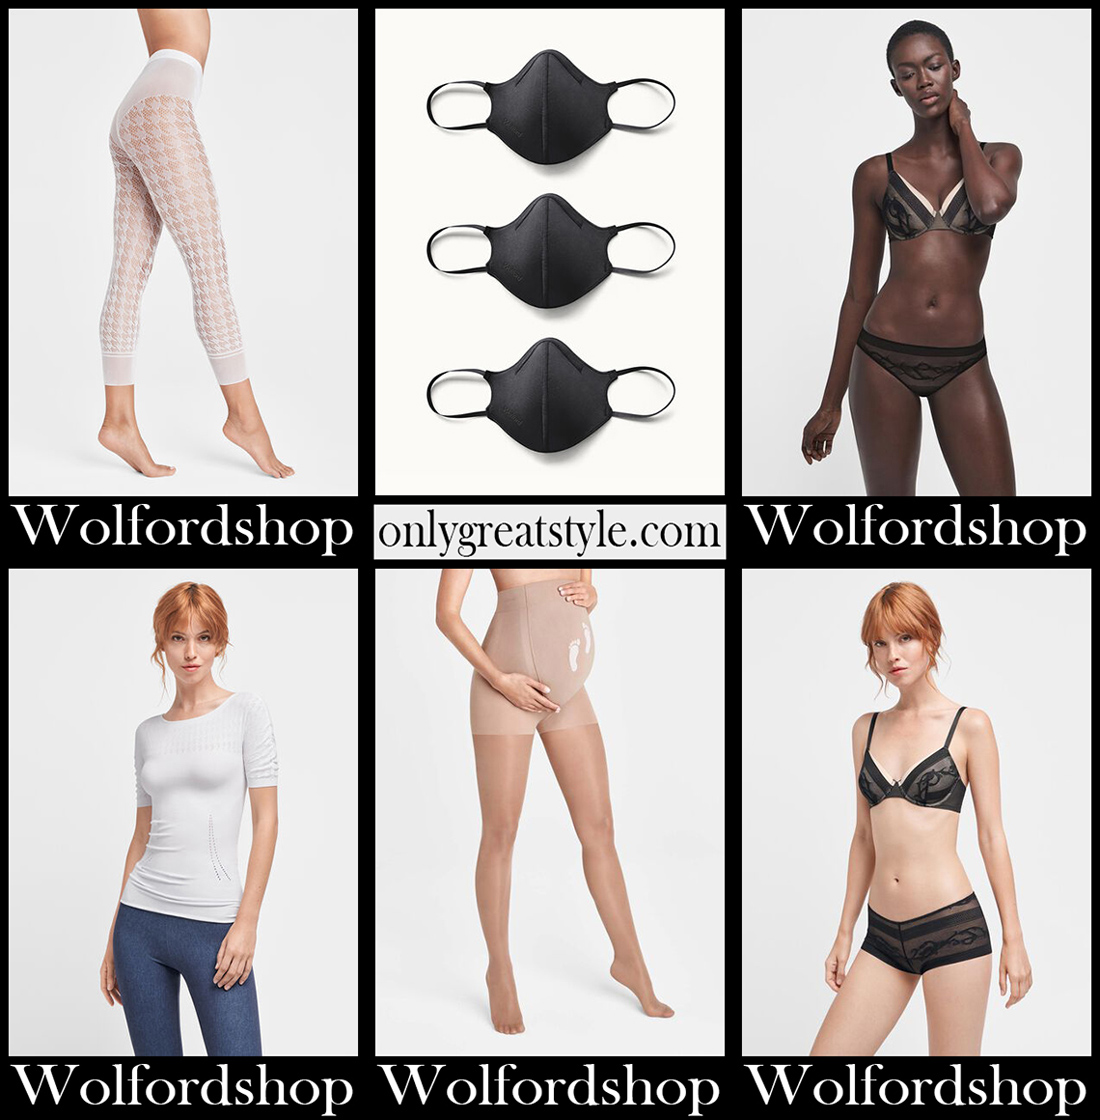 Wolfordshop underwear 2020 21 womens clothing